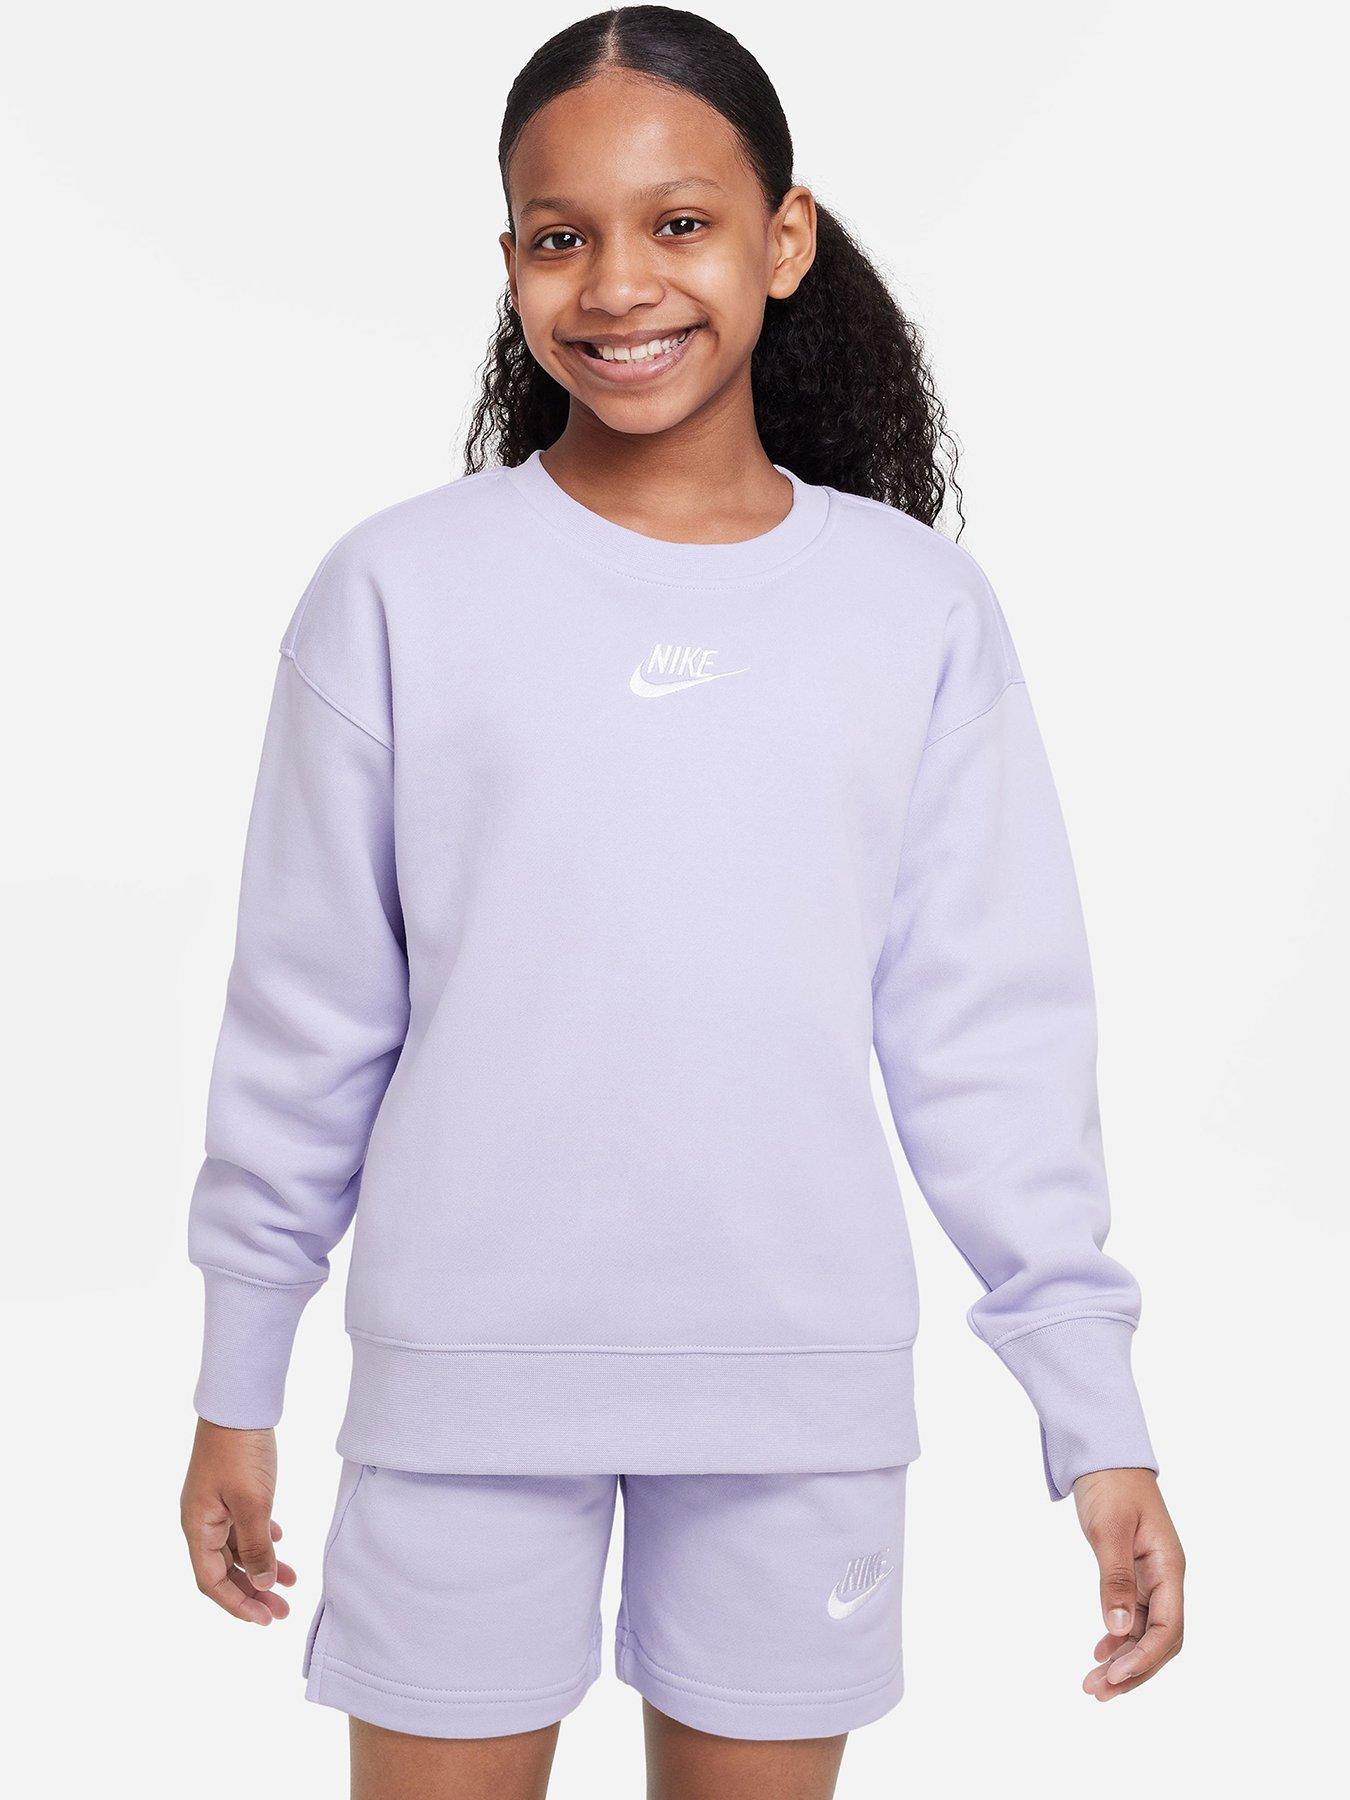 Nike Girls | Girls Nike Clothes Very.co.uk